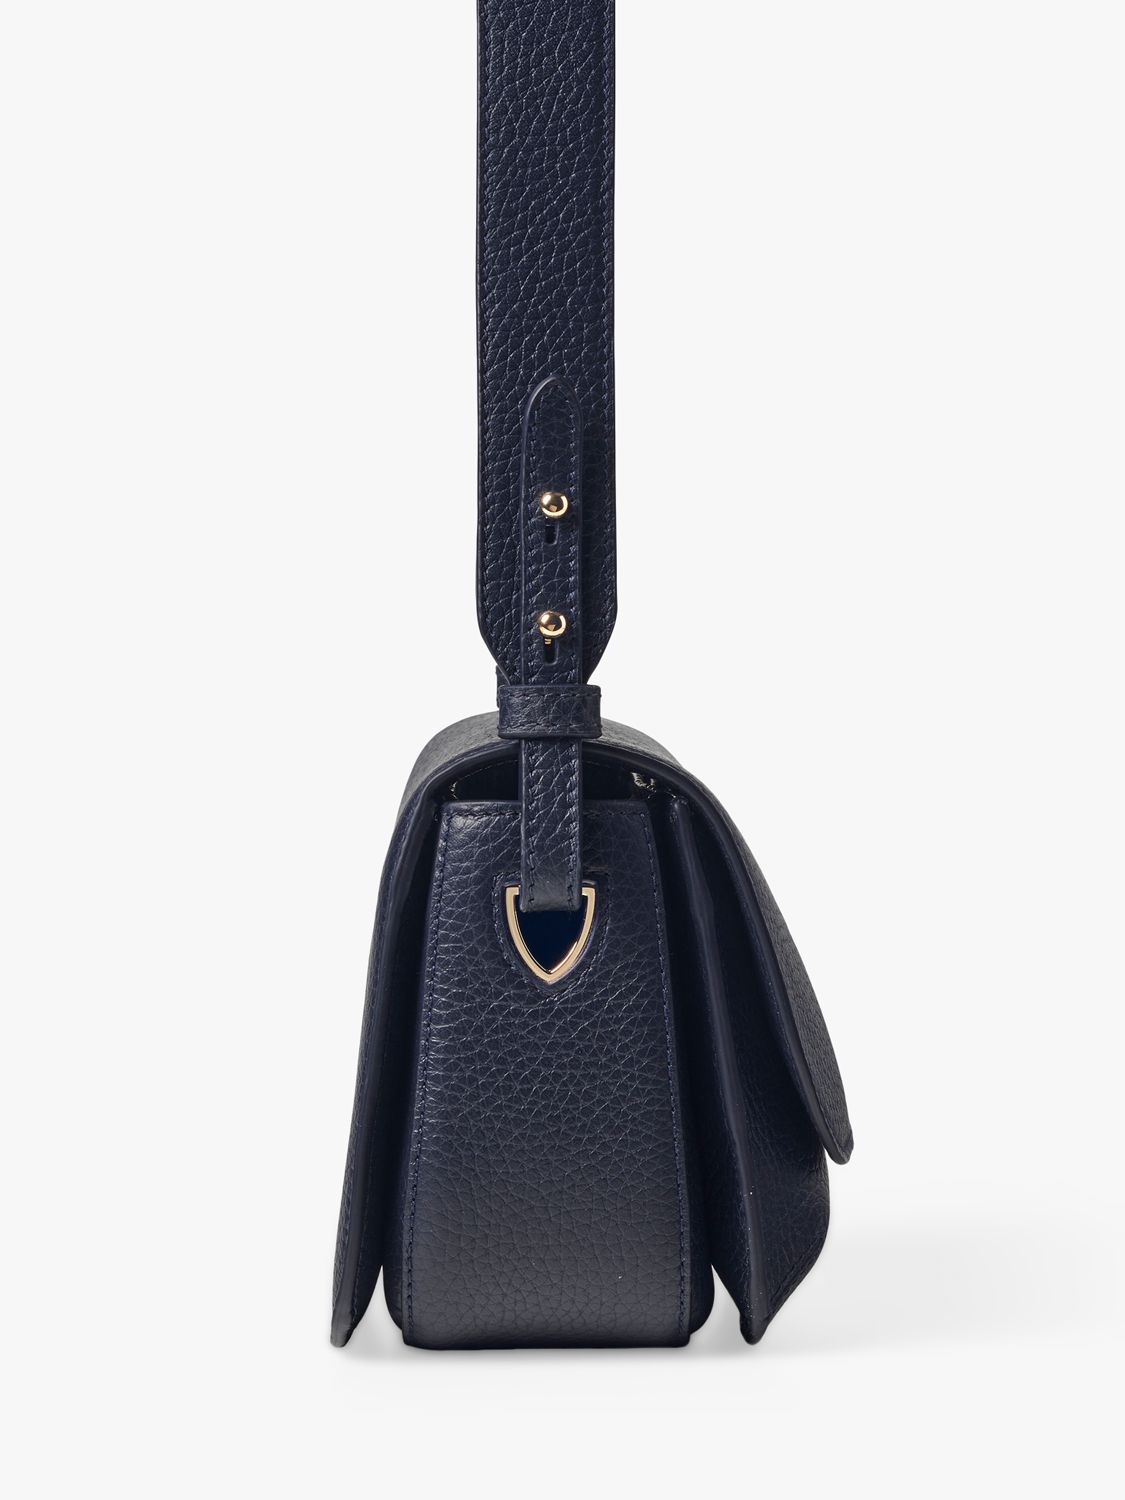 Aspinal of London Ella Pebble Leather Crossbody Bag, Navy